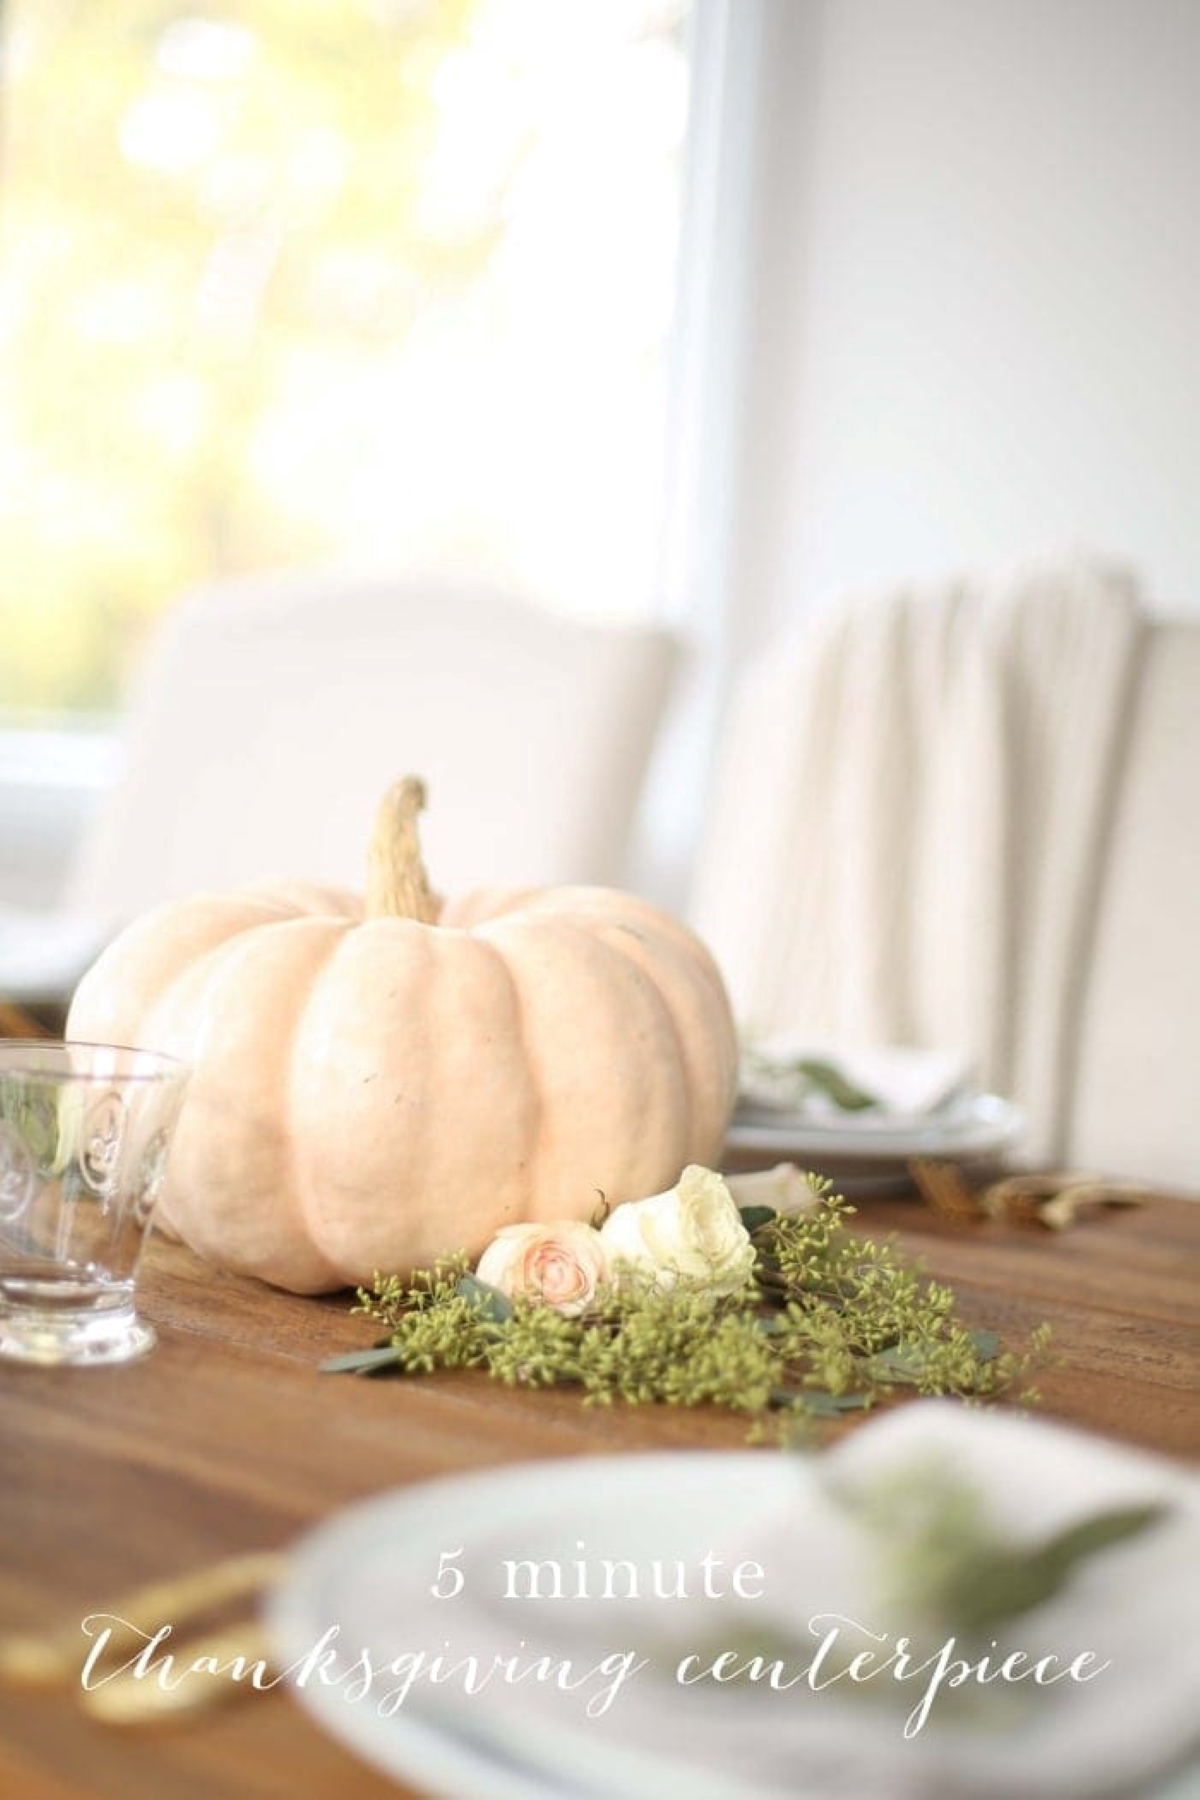 A Thanksgiving centerpiece set with a white pumpkin and fresh flowers below. 